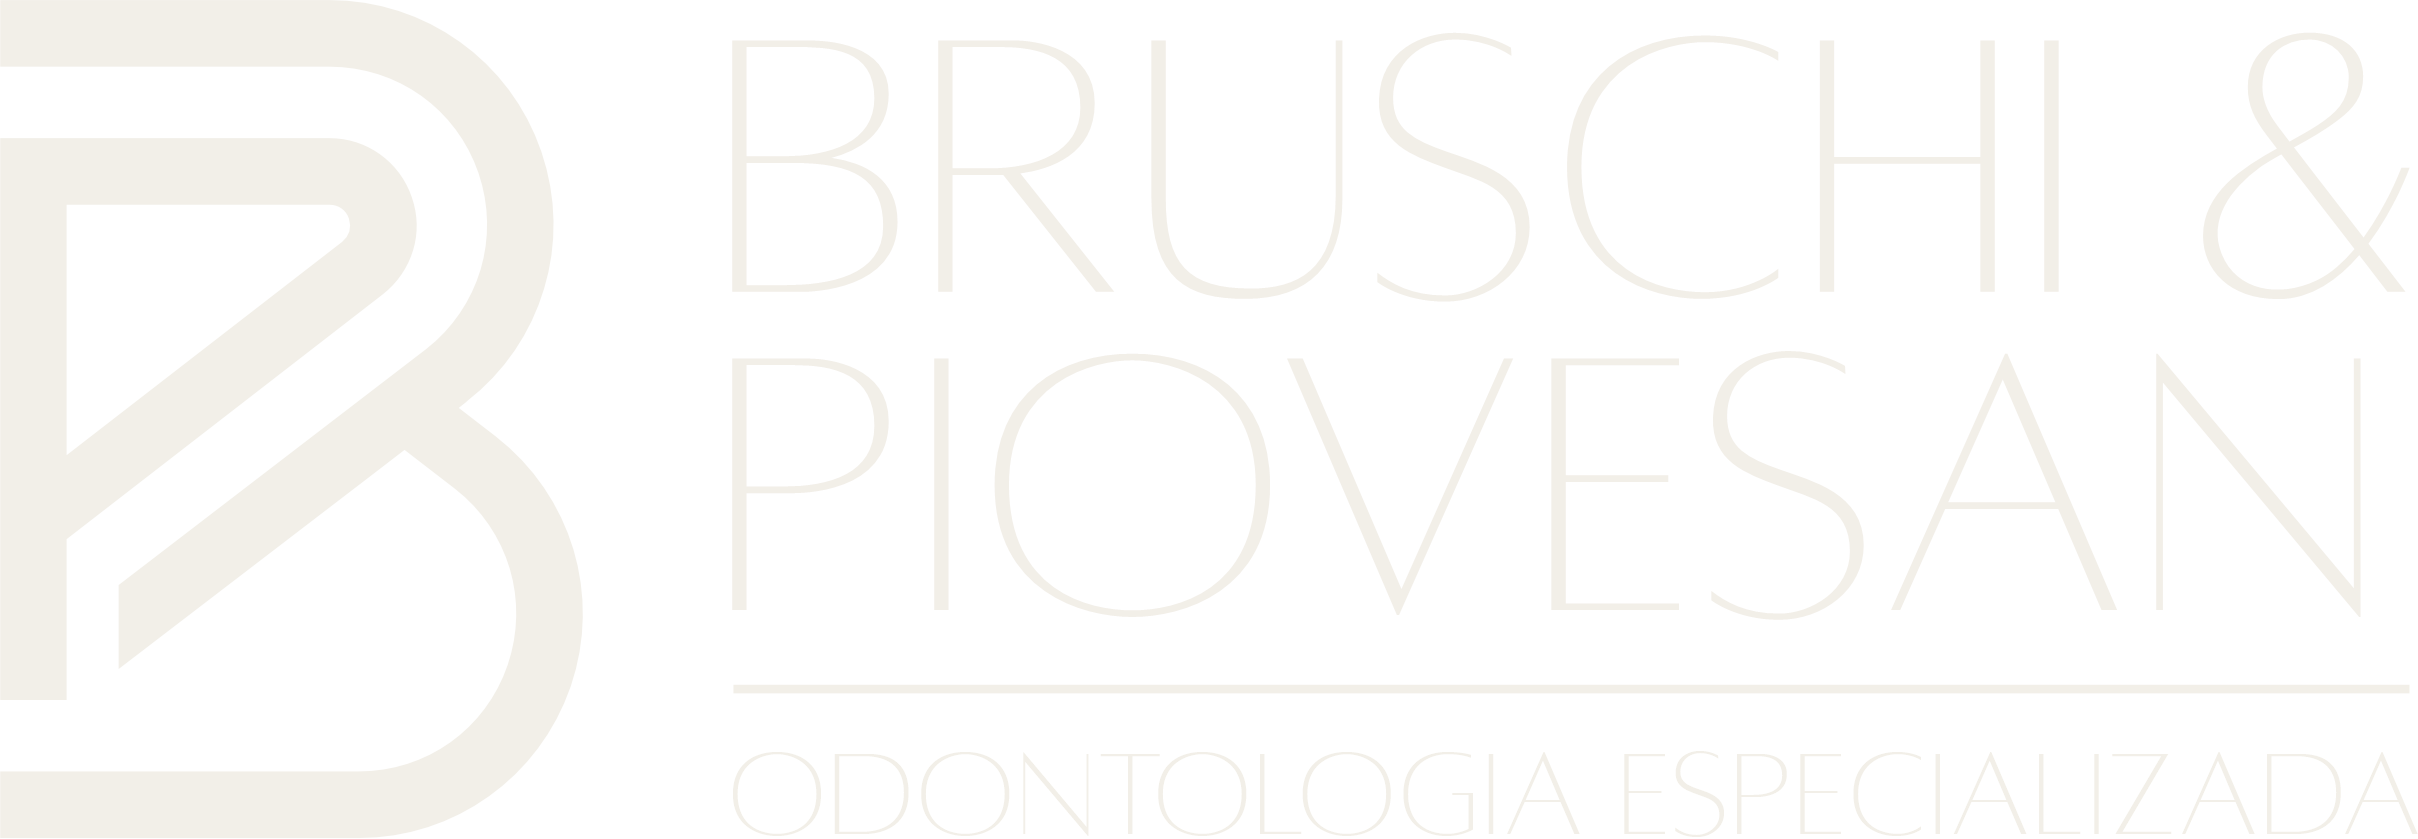 Bruschi & Piovesan - Logo 3